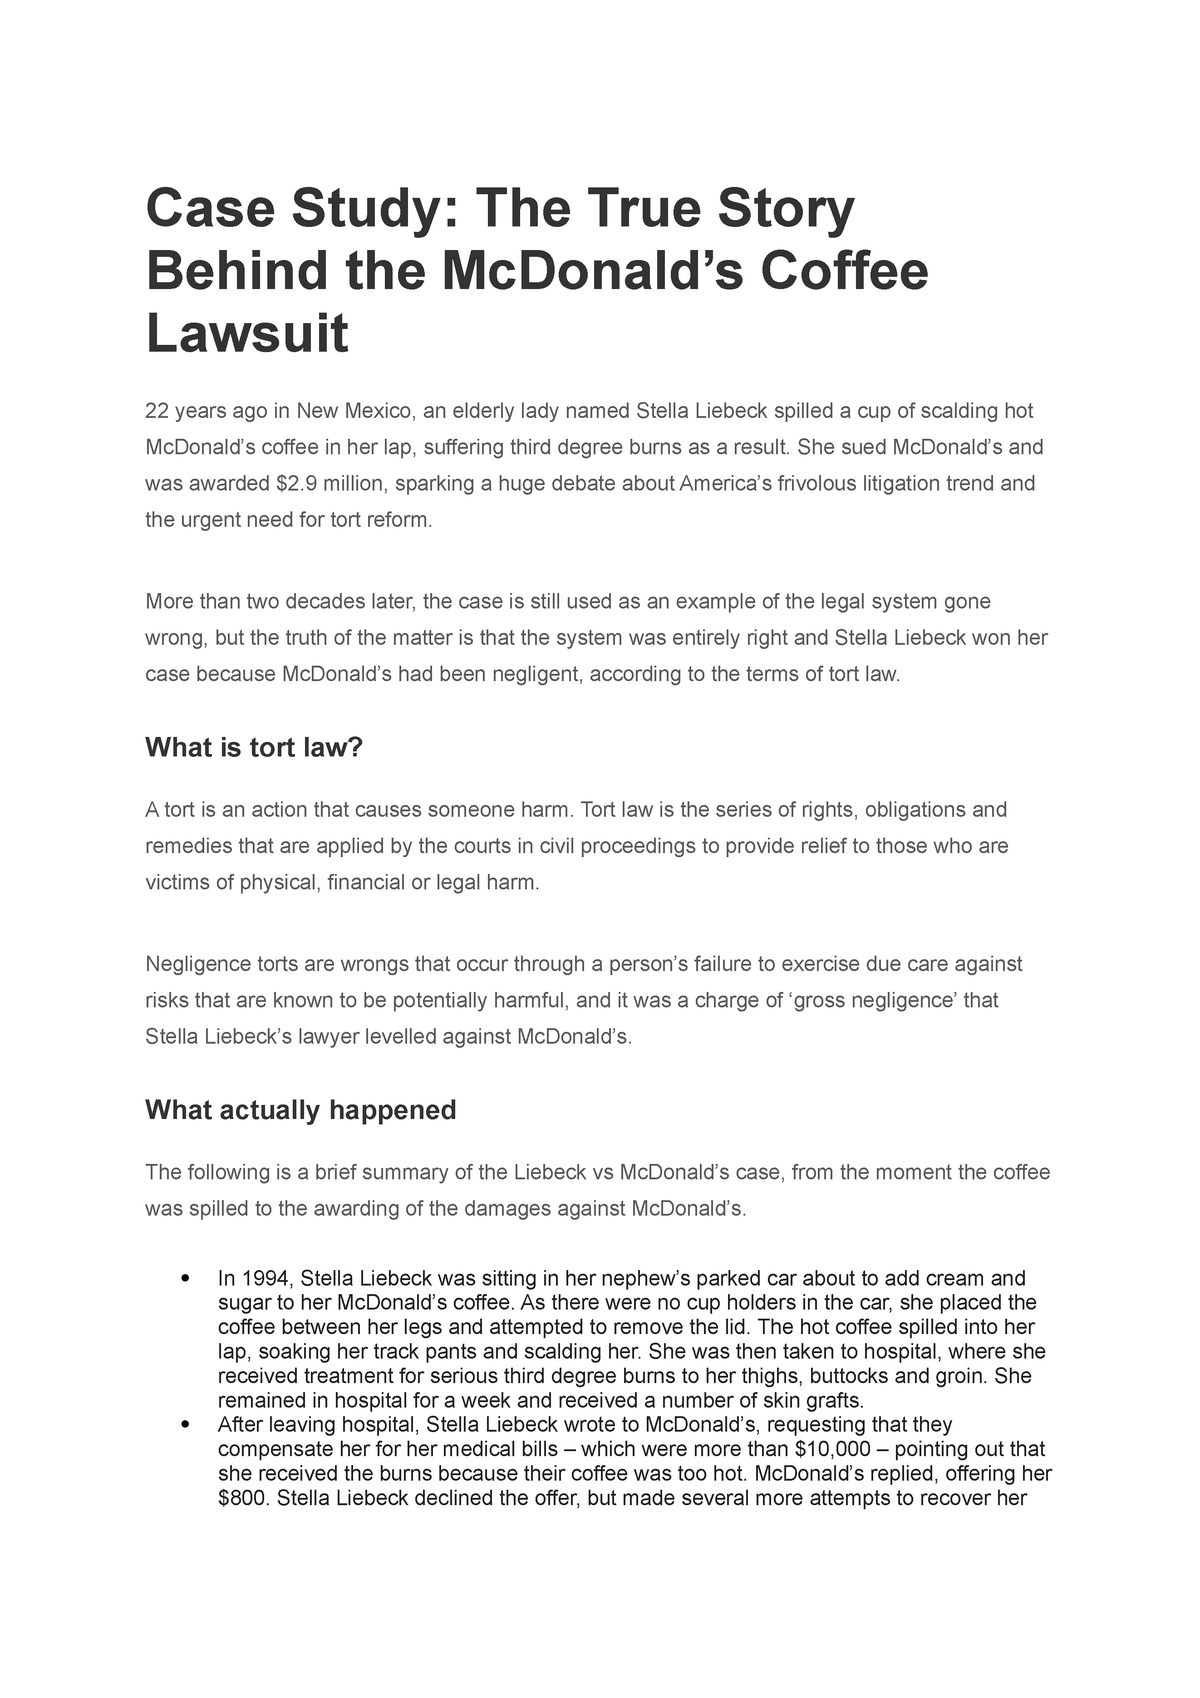 mcdonald's hot coffee case study